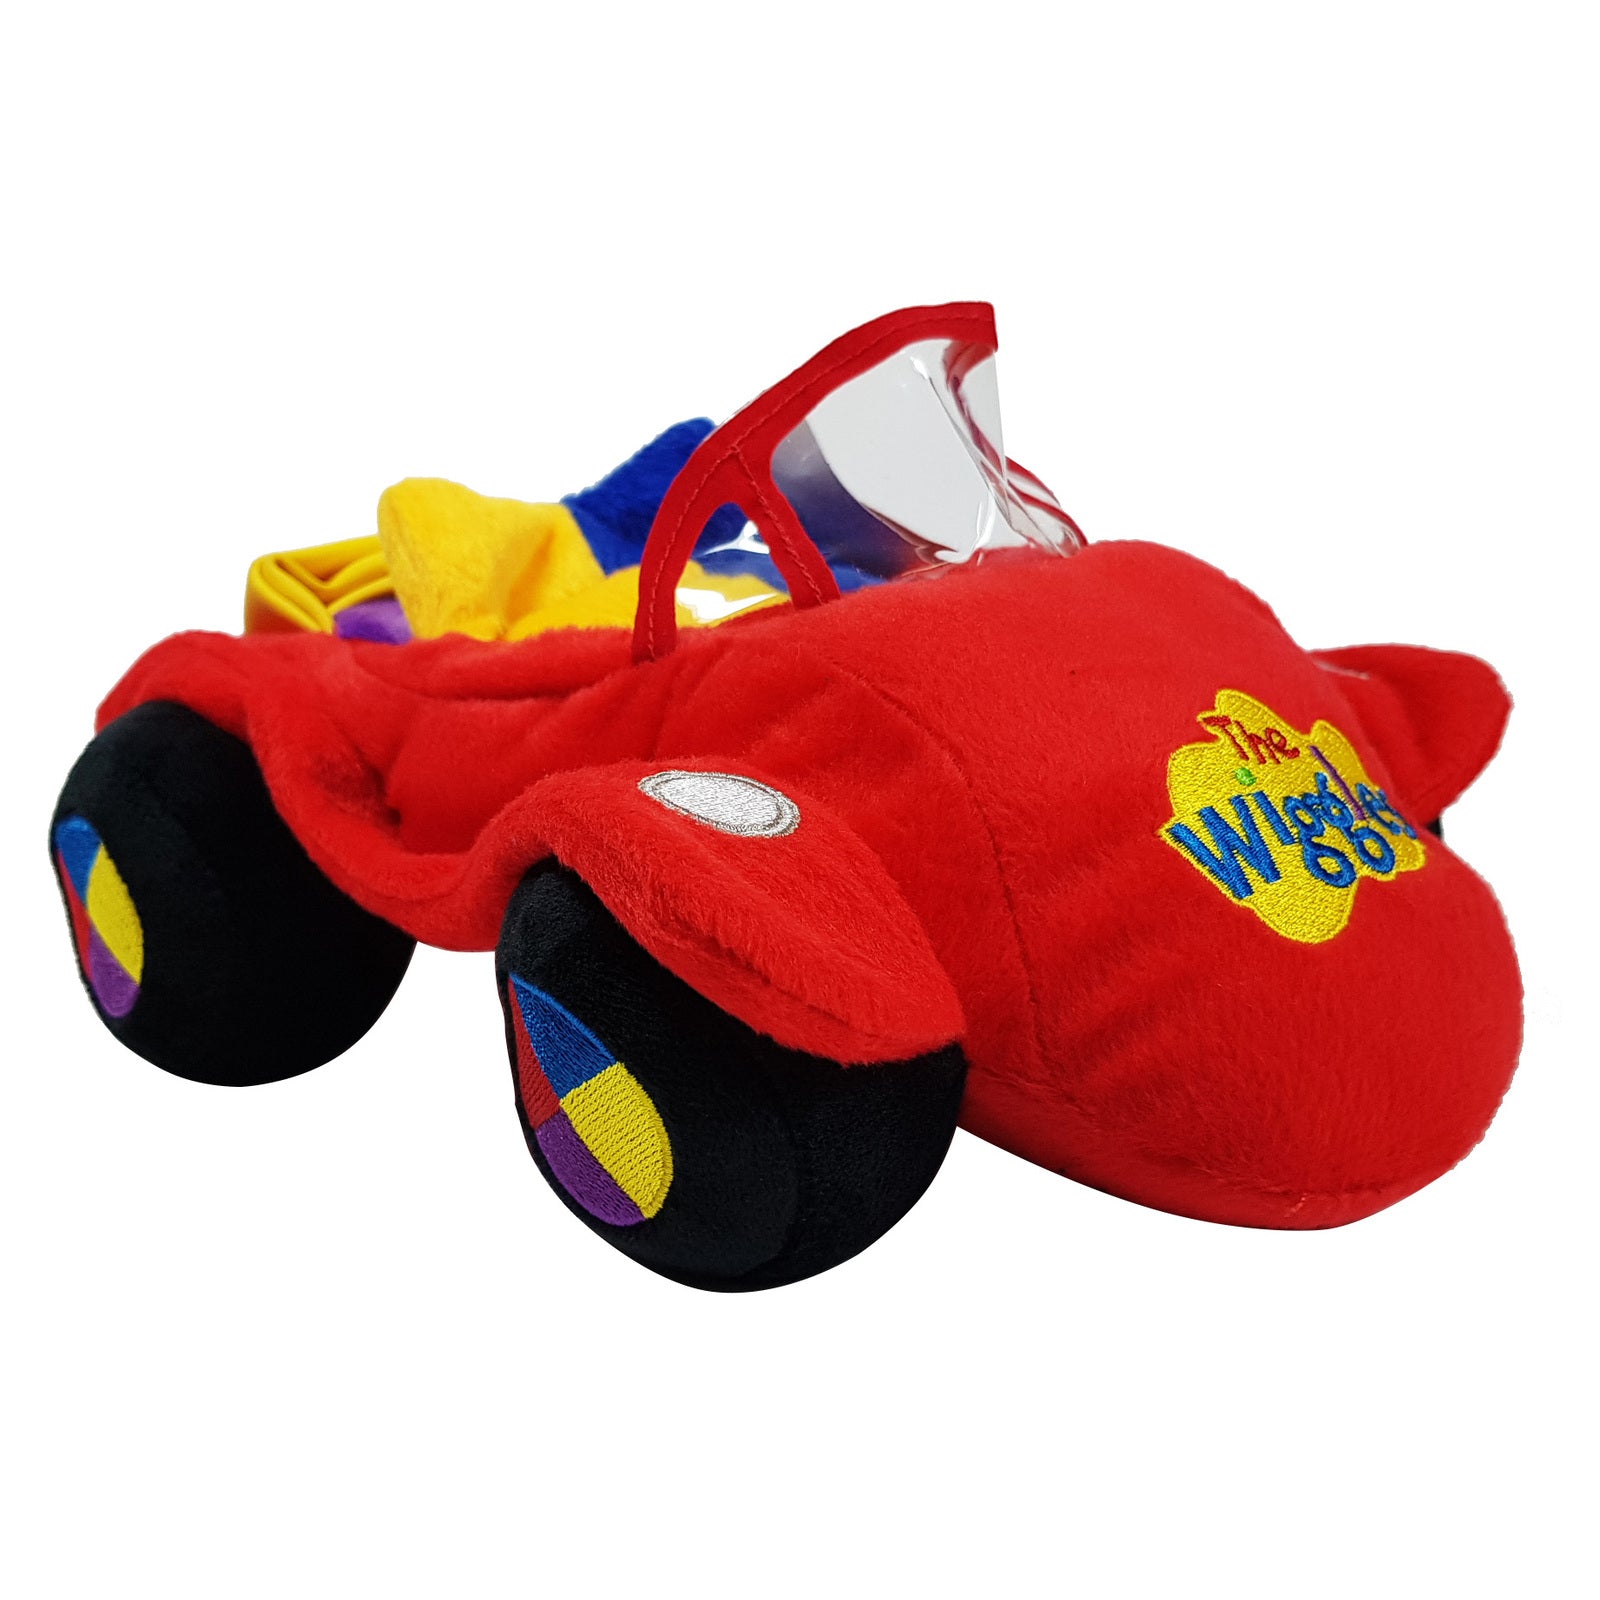 The Wiggles Plush - Big Red Car